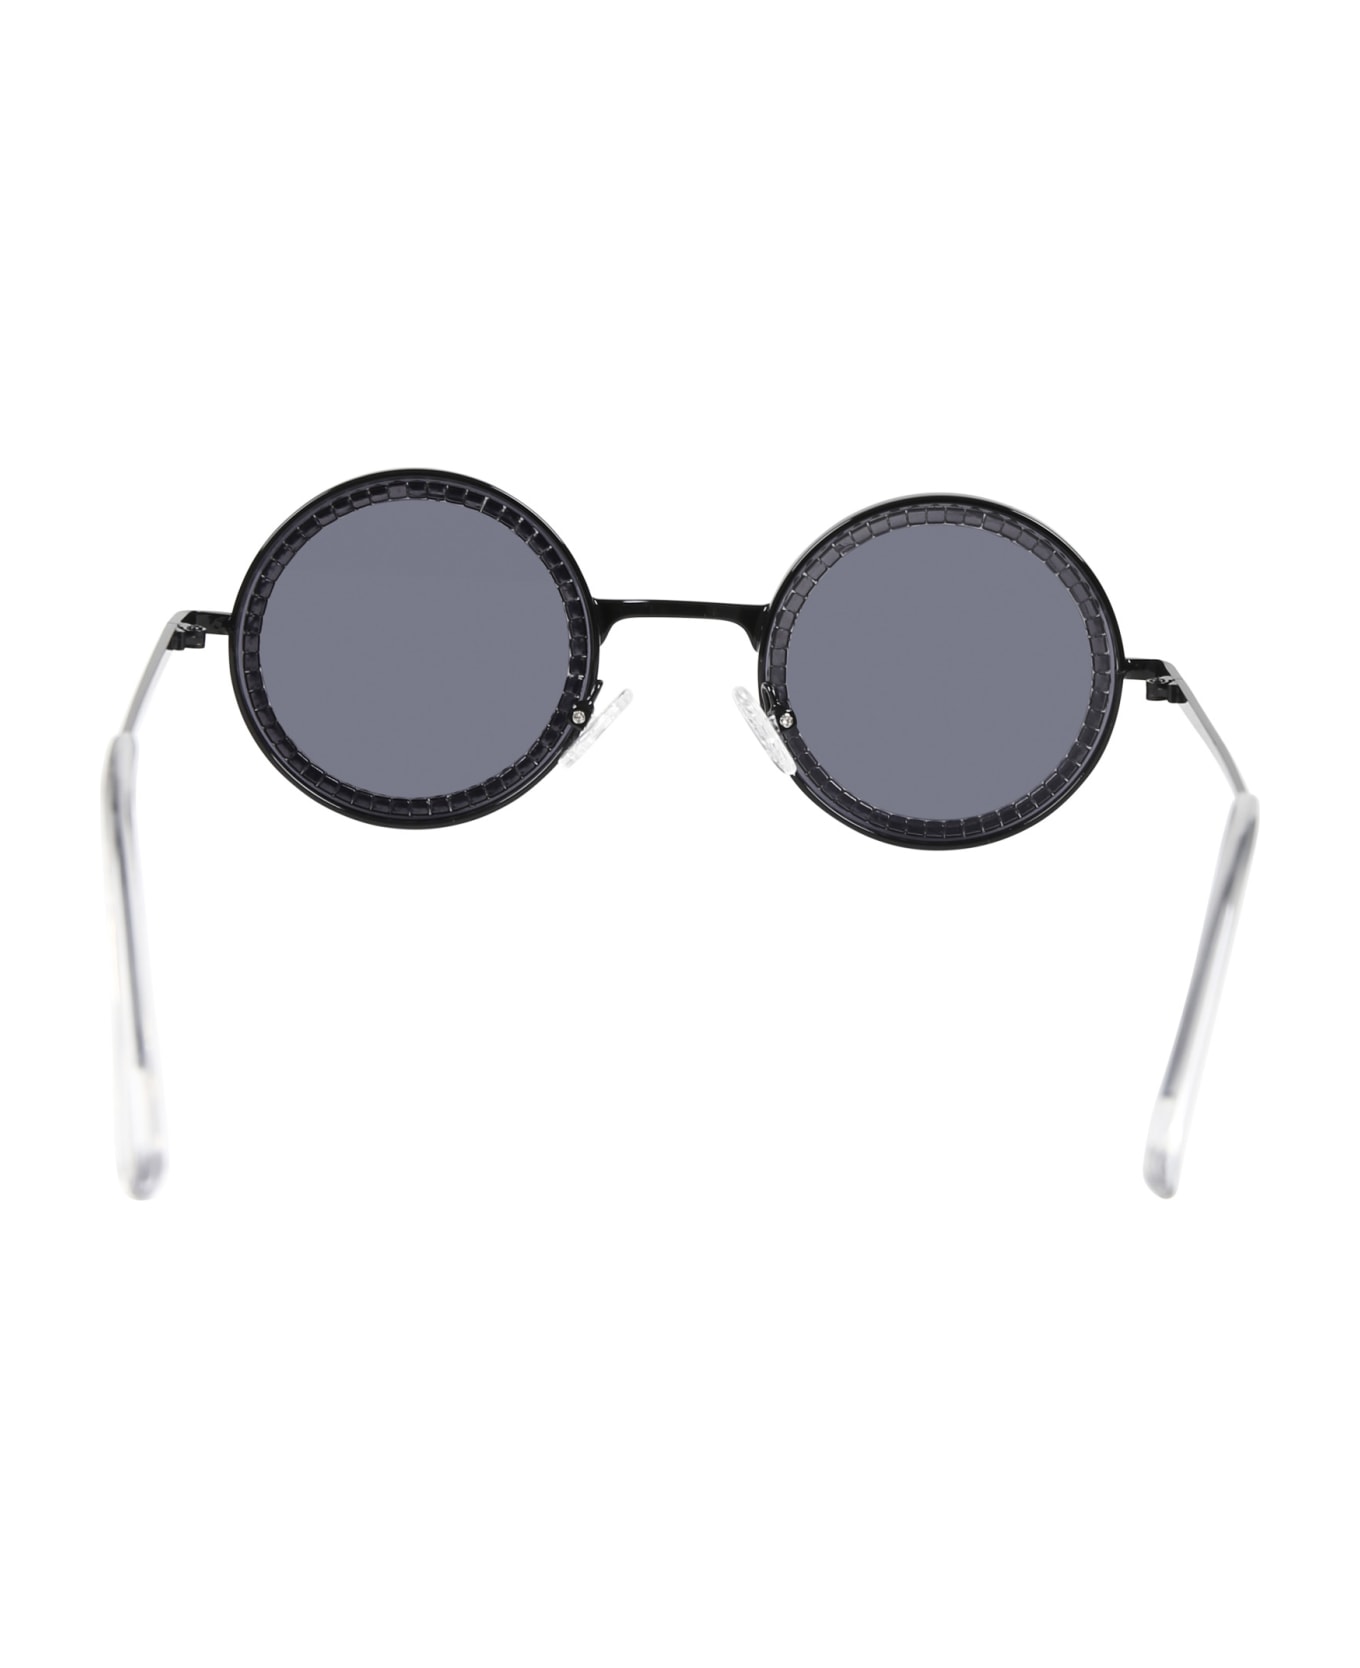 Monnalisa Black Glasses For Girl With Rhinestones - Nero